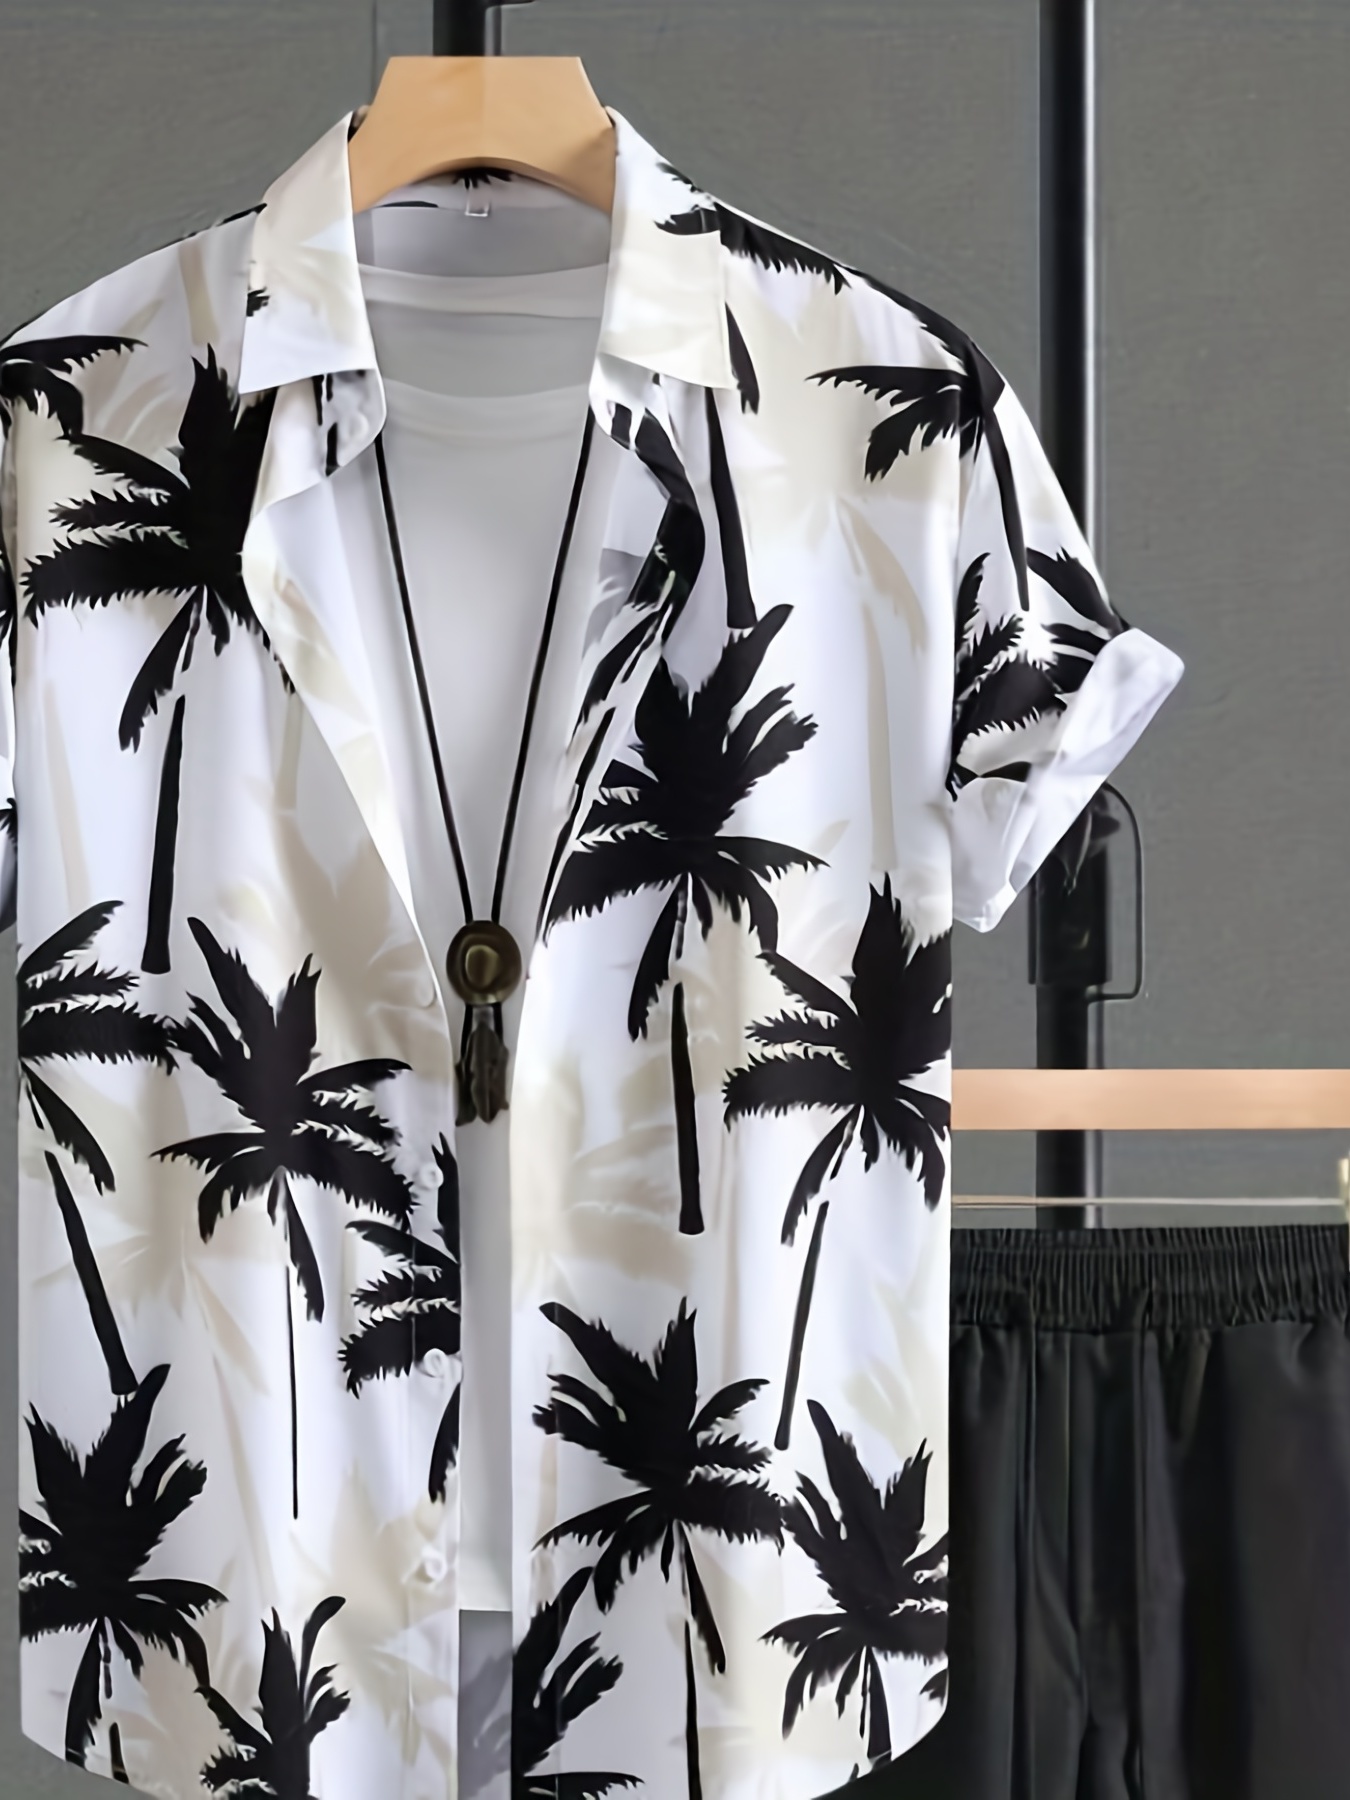 coconut tree vintage car print mens casual short sleeve shirt mens shirt for summer vacation resort details 7